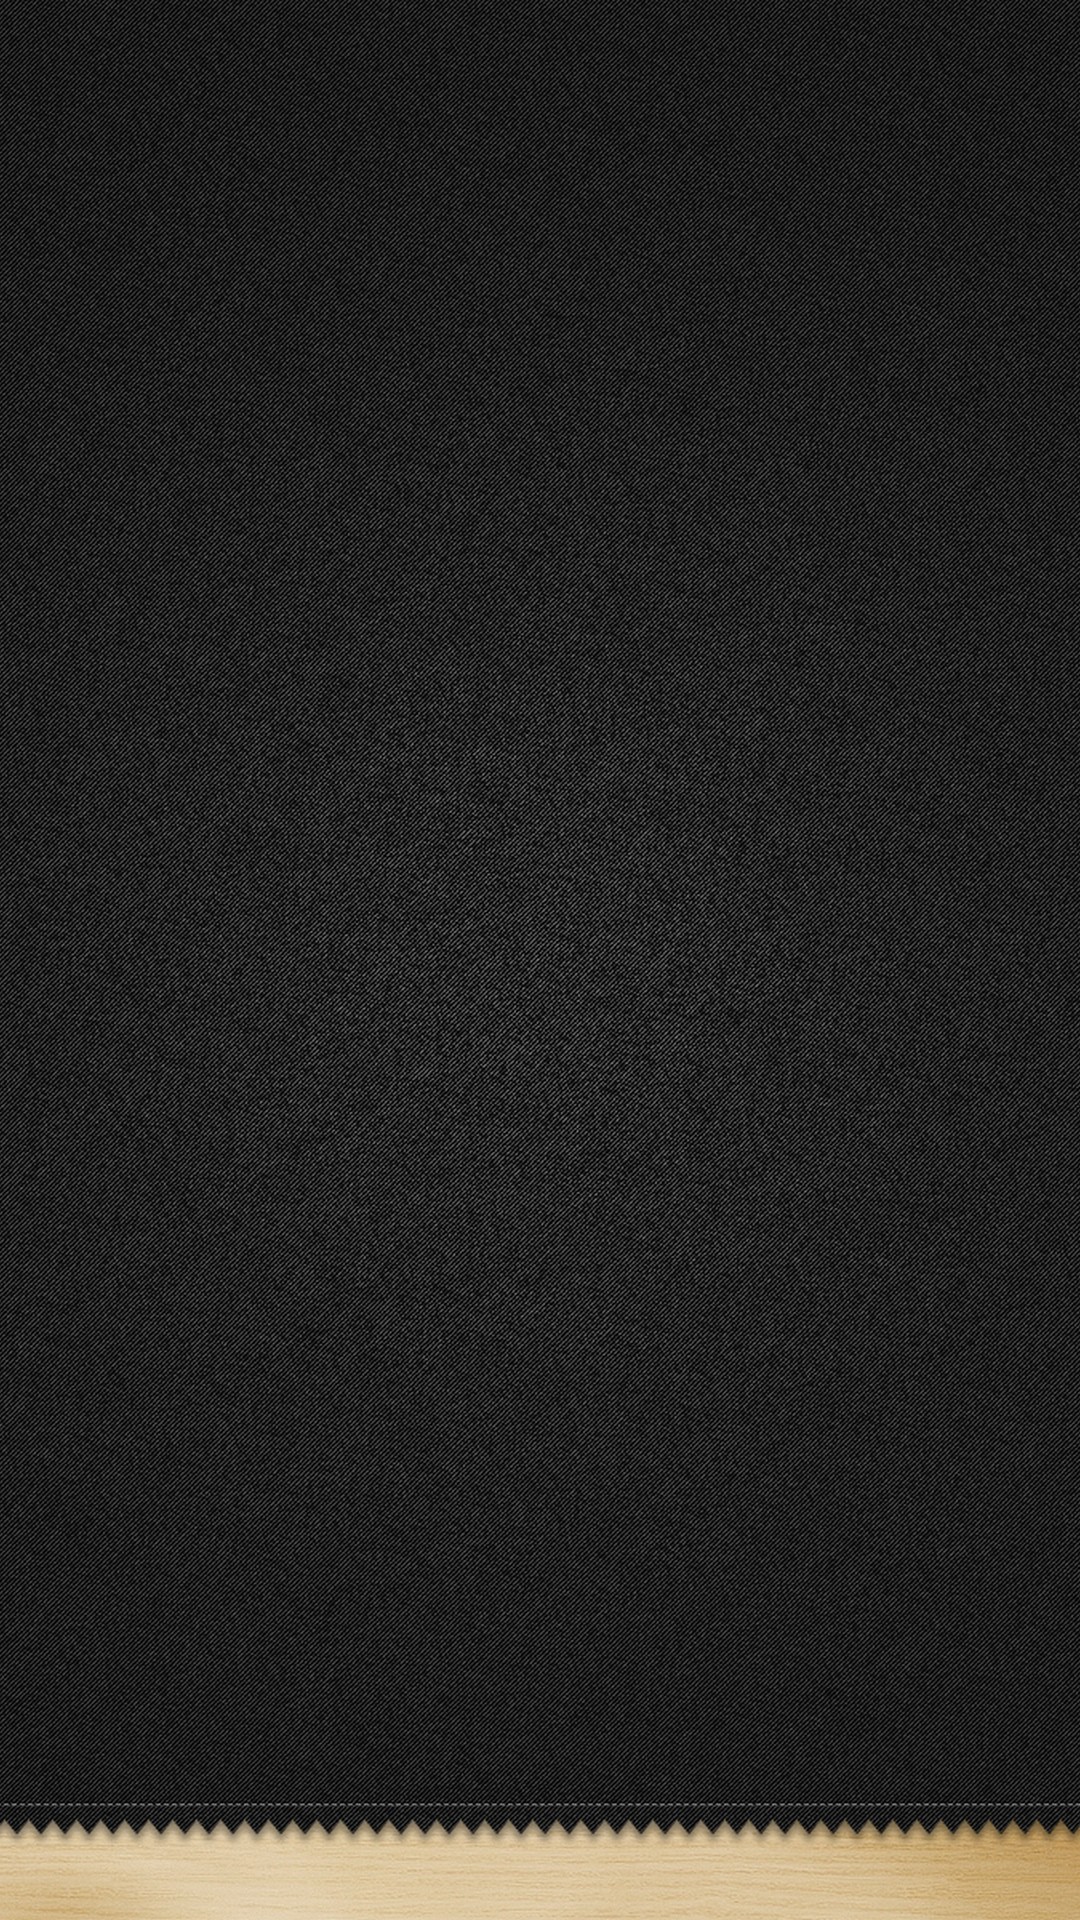 1080x1920 Clean Dark Denim Texture Homescreen iPhone 6 Plus HD Wallpaper